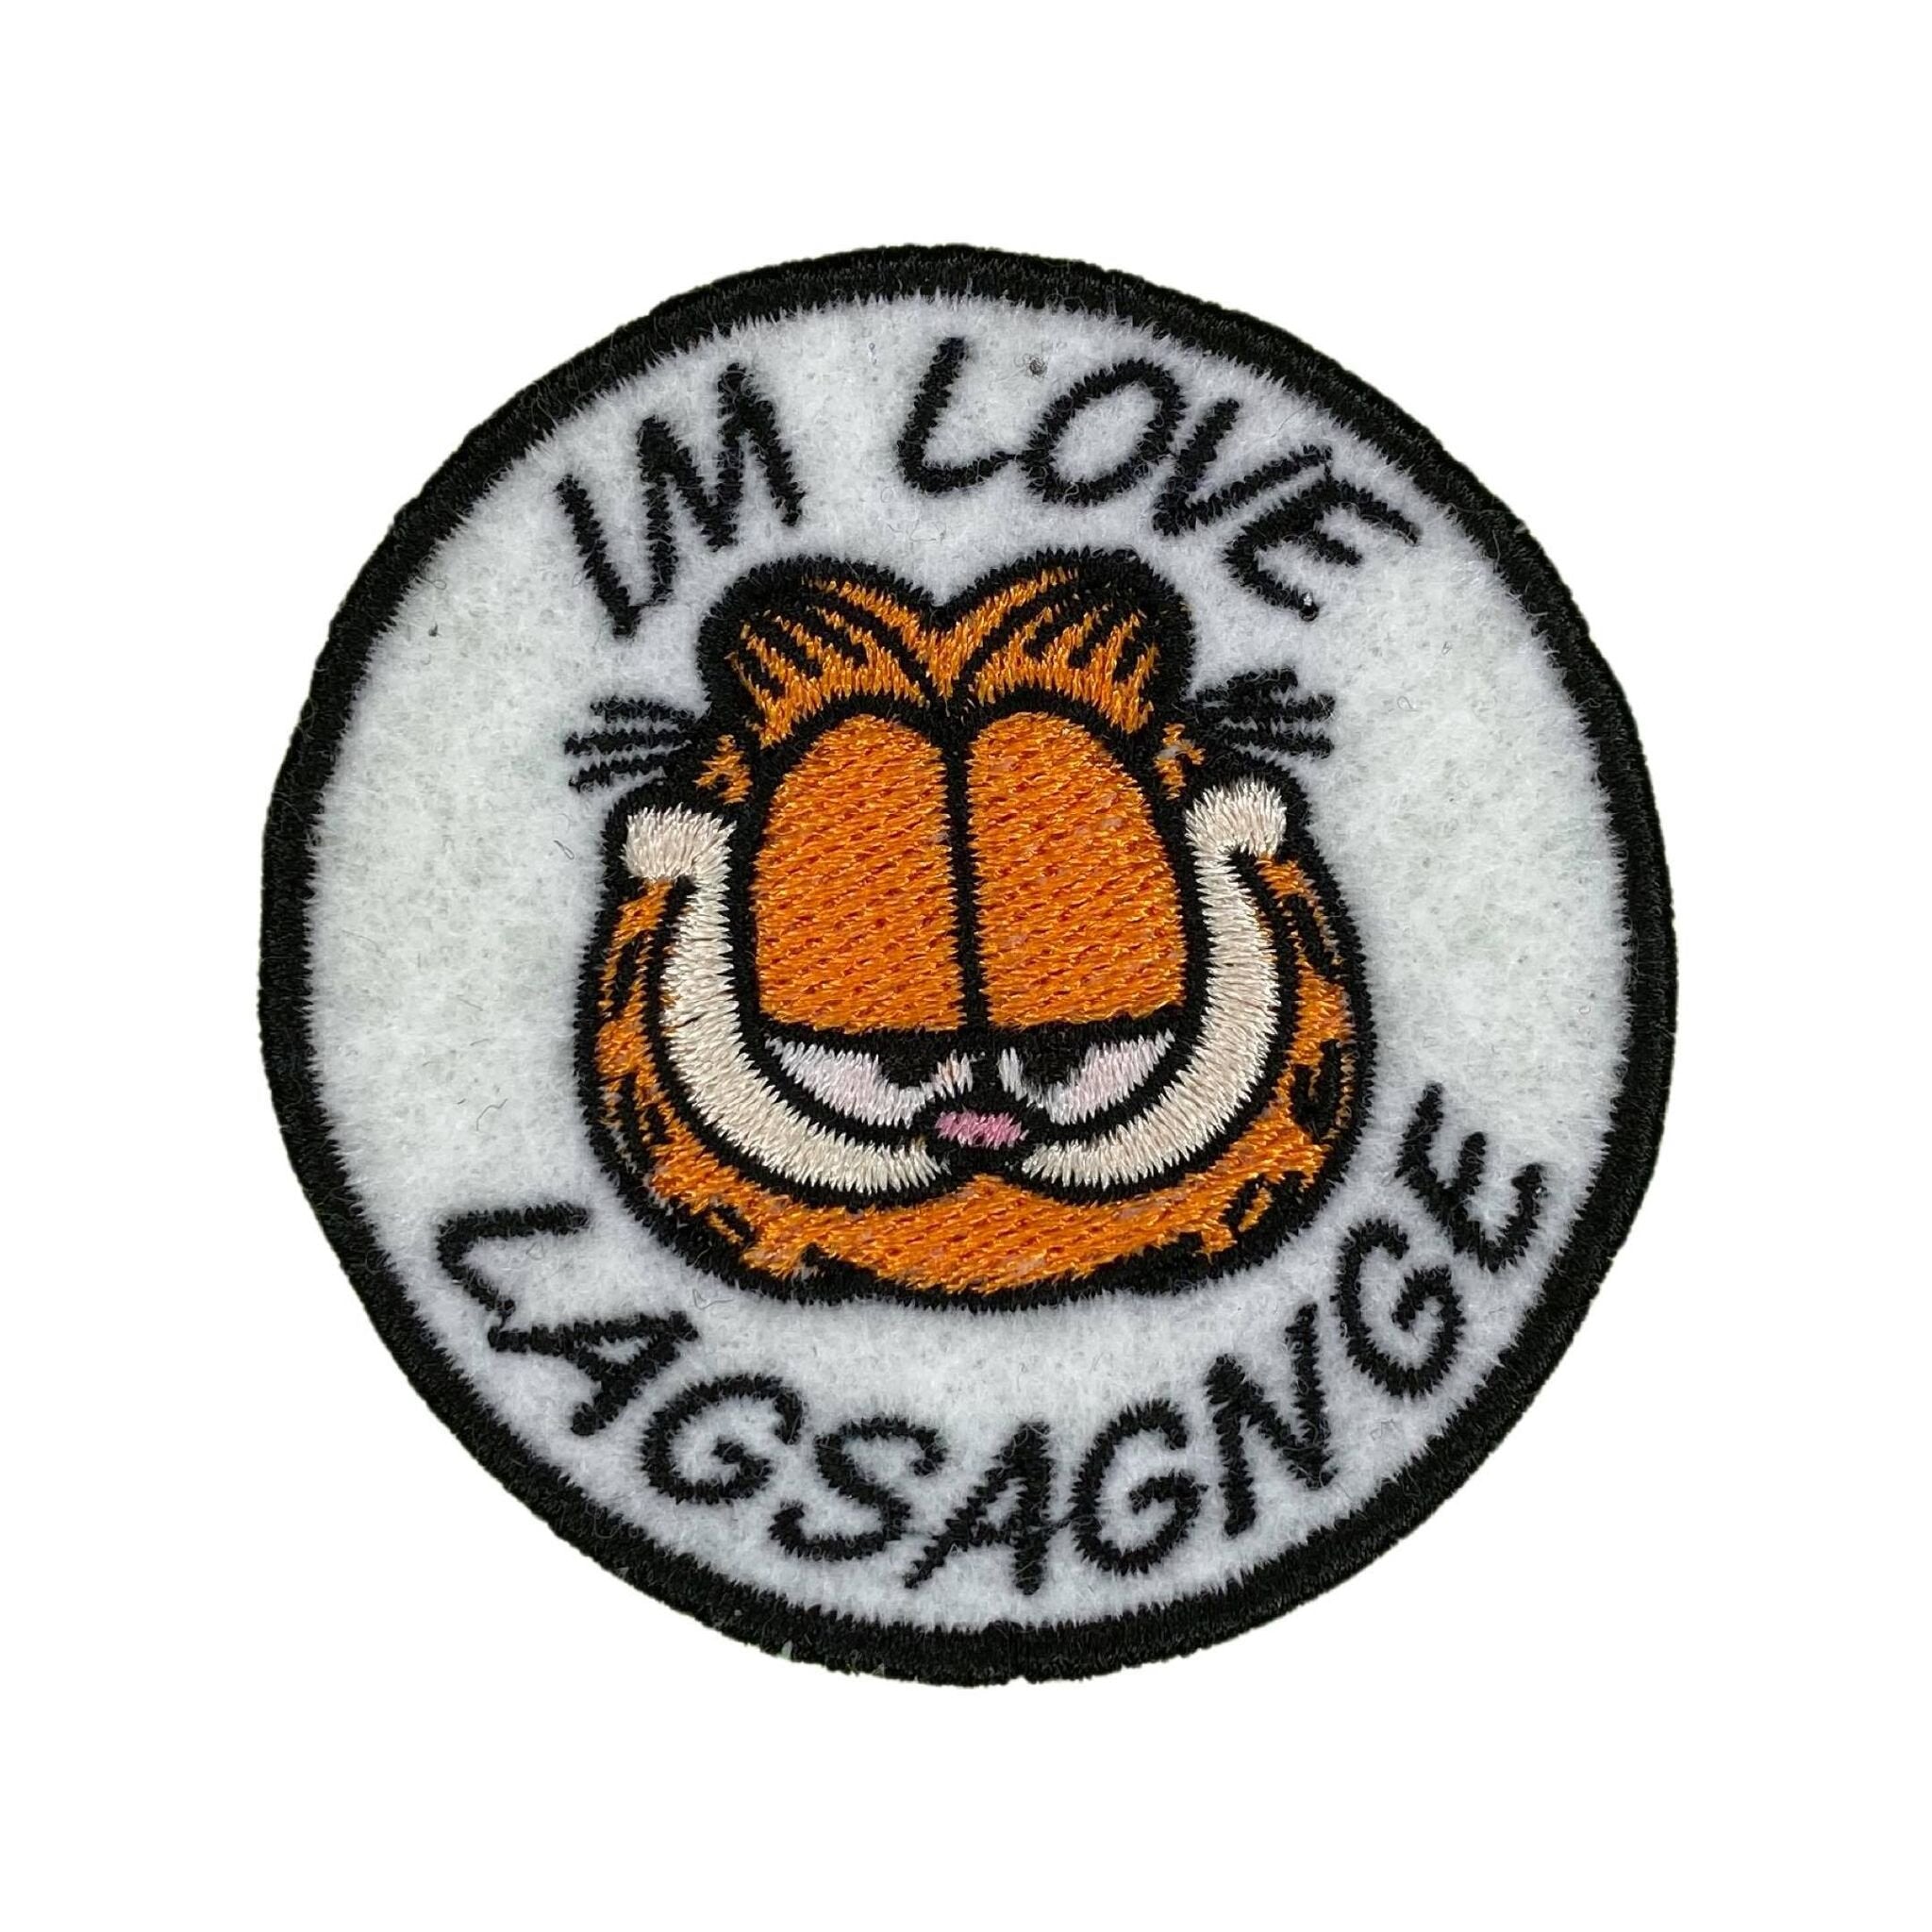 Im Love Lagsagnge Garfield Embroidered Iron-on Patch - IncredibleGood Inc